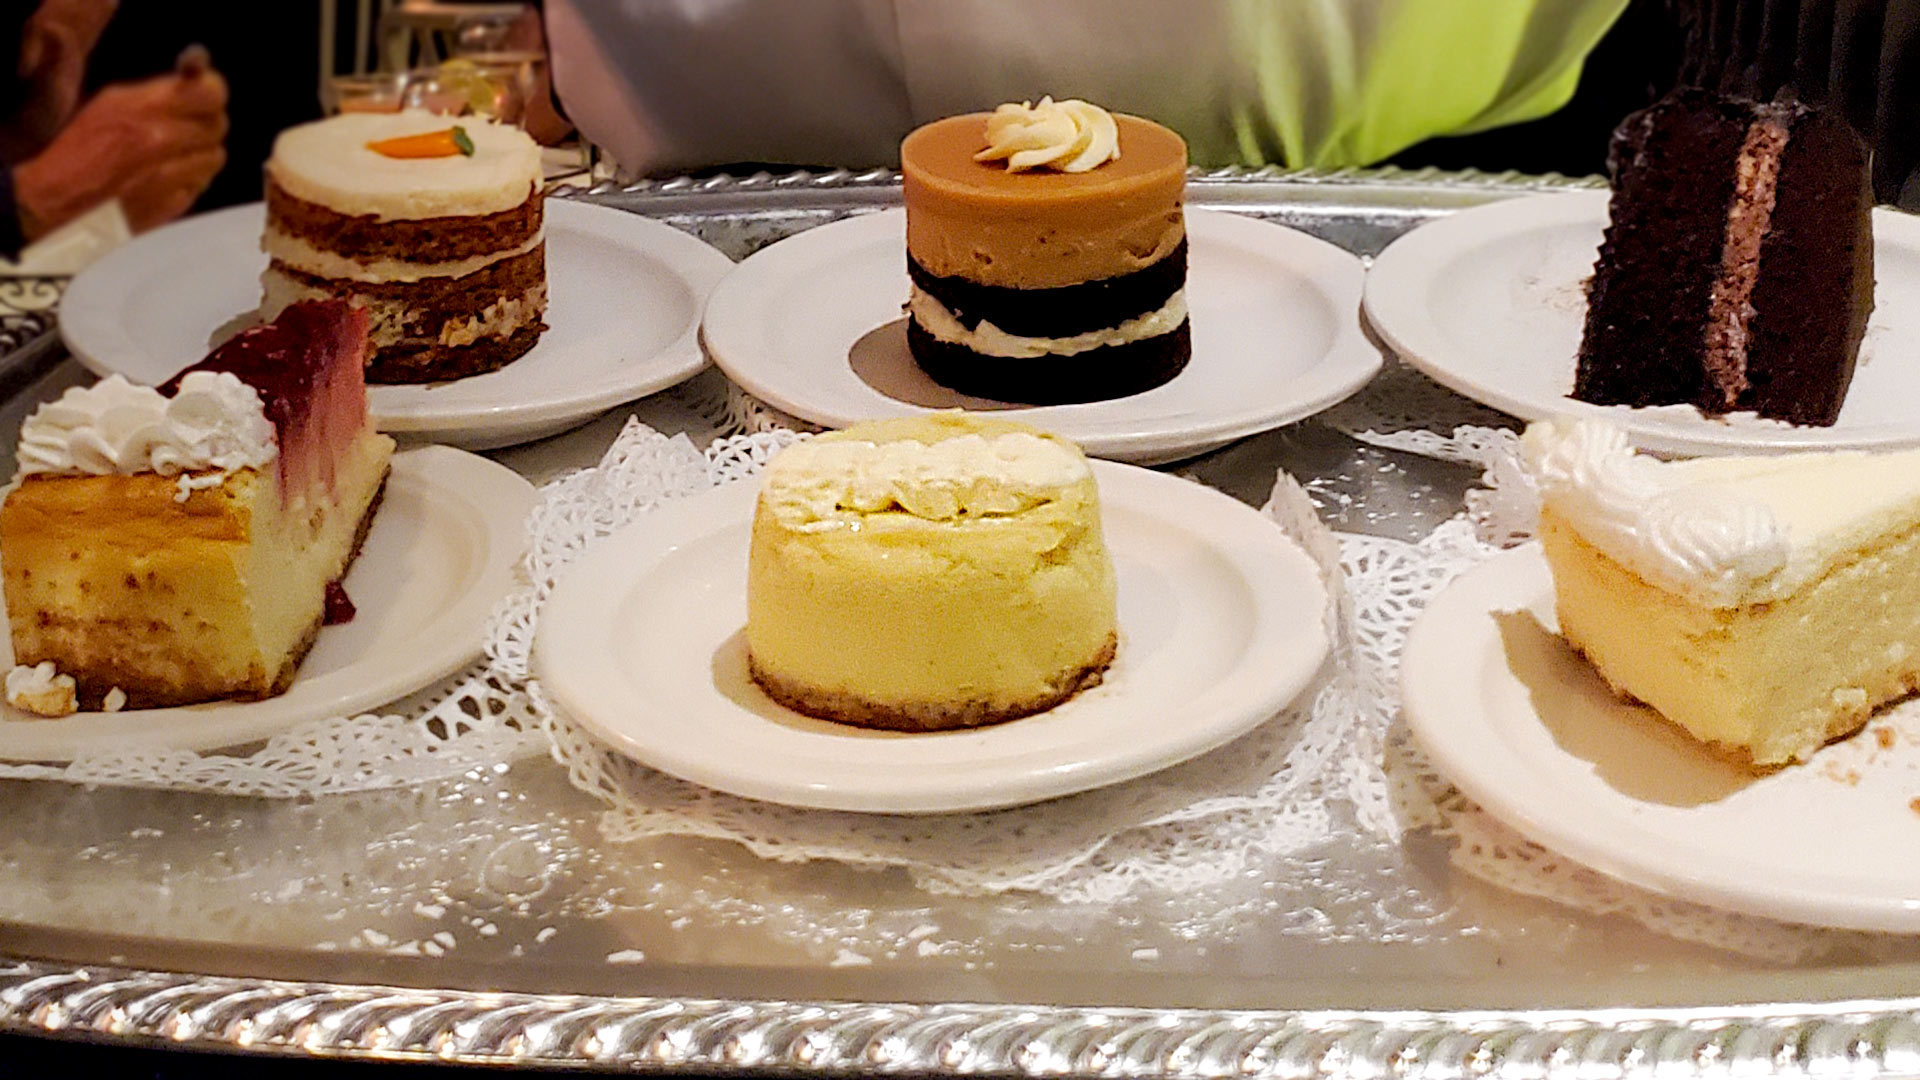 the dessert tray